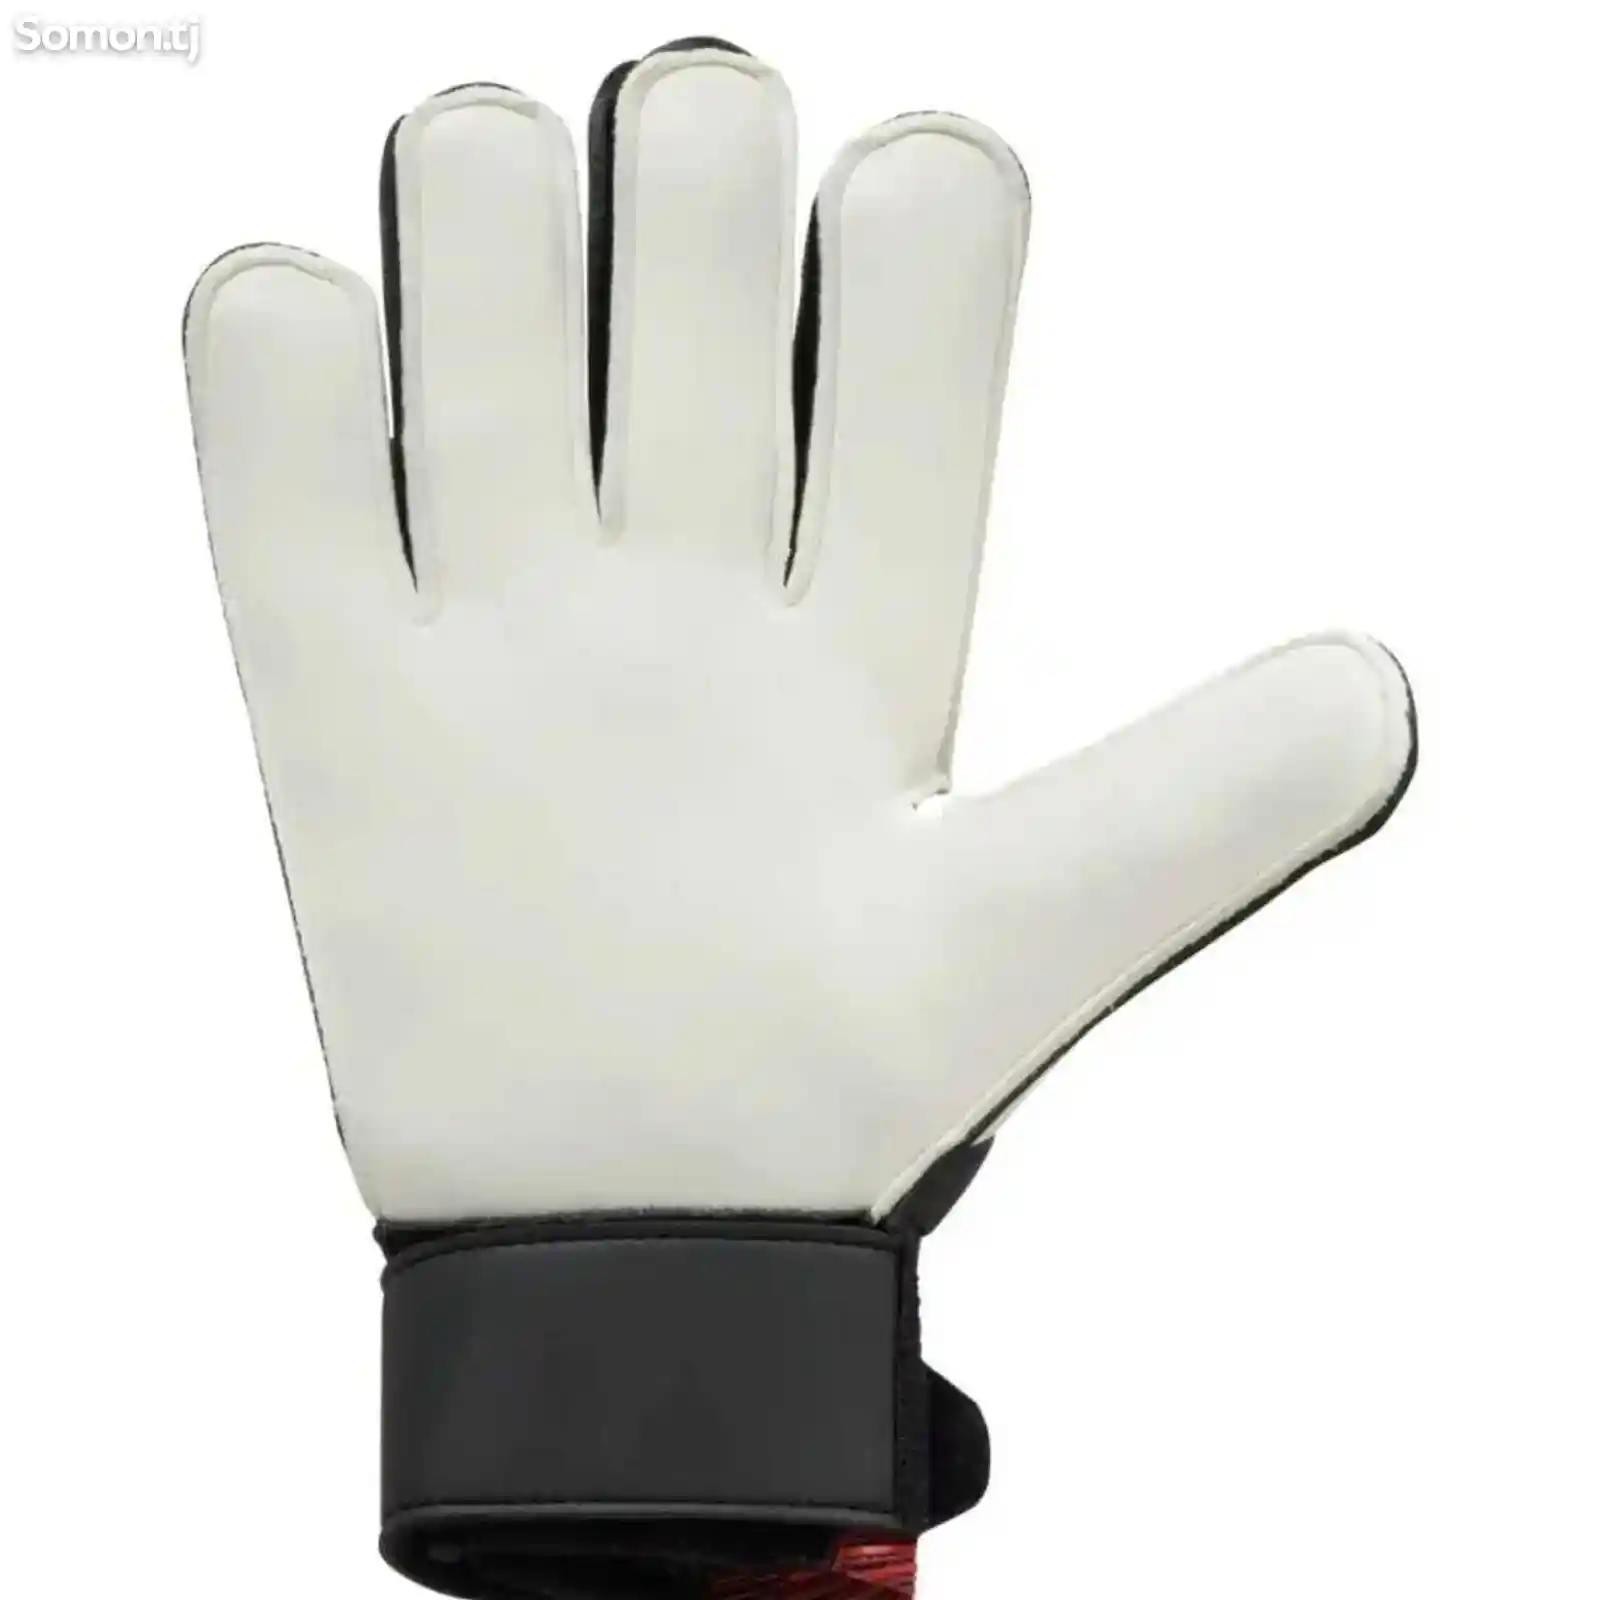 Вратарские перчатки Uhlsport Powerline Soft оригинал-2